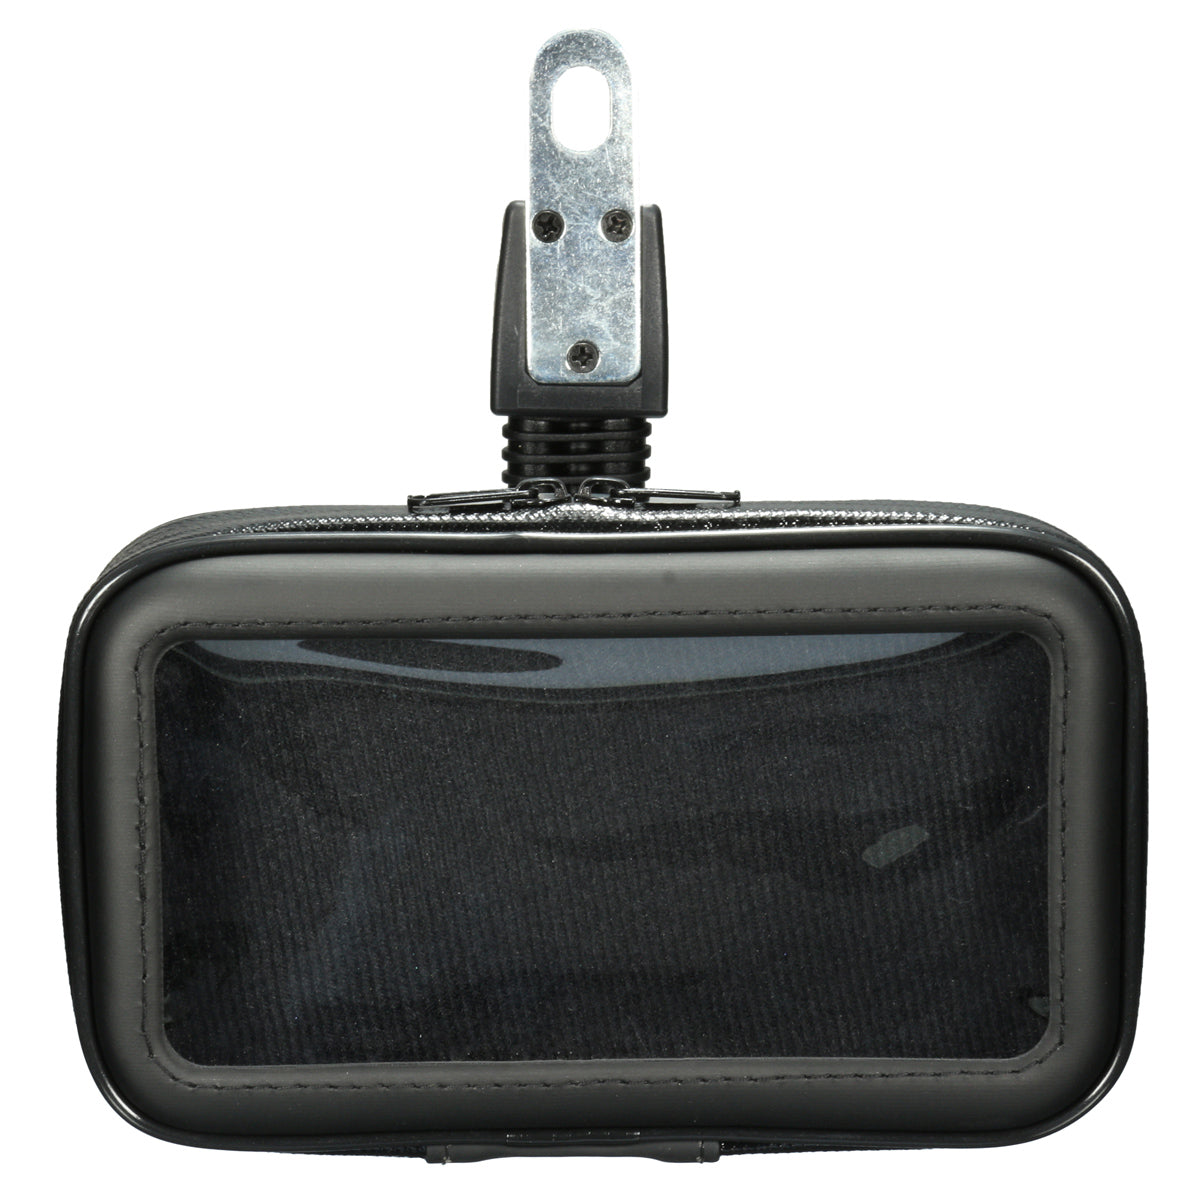 6inch Waterproof Phone Holder GPS Case Motorcycle Rear View Mirror Mount